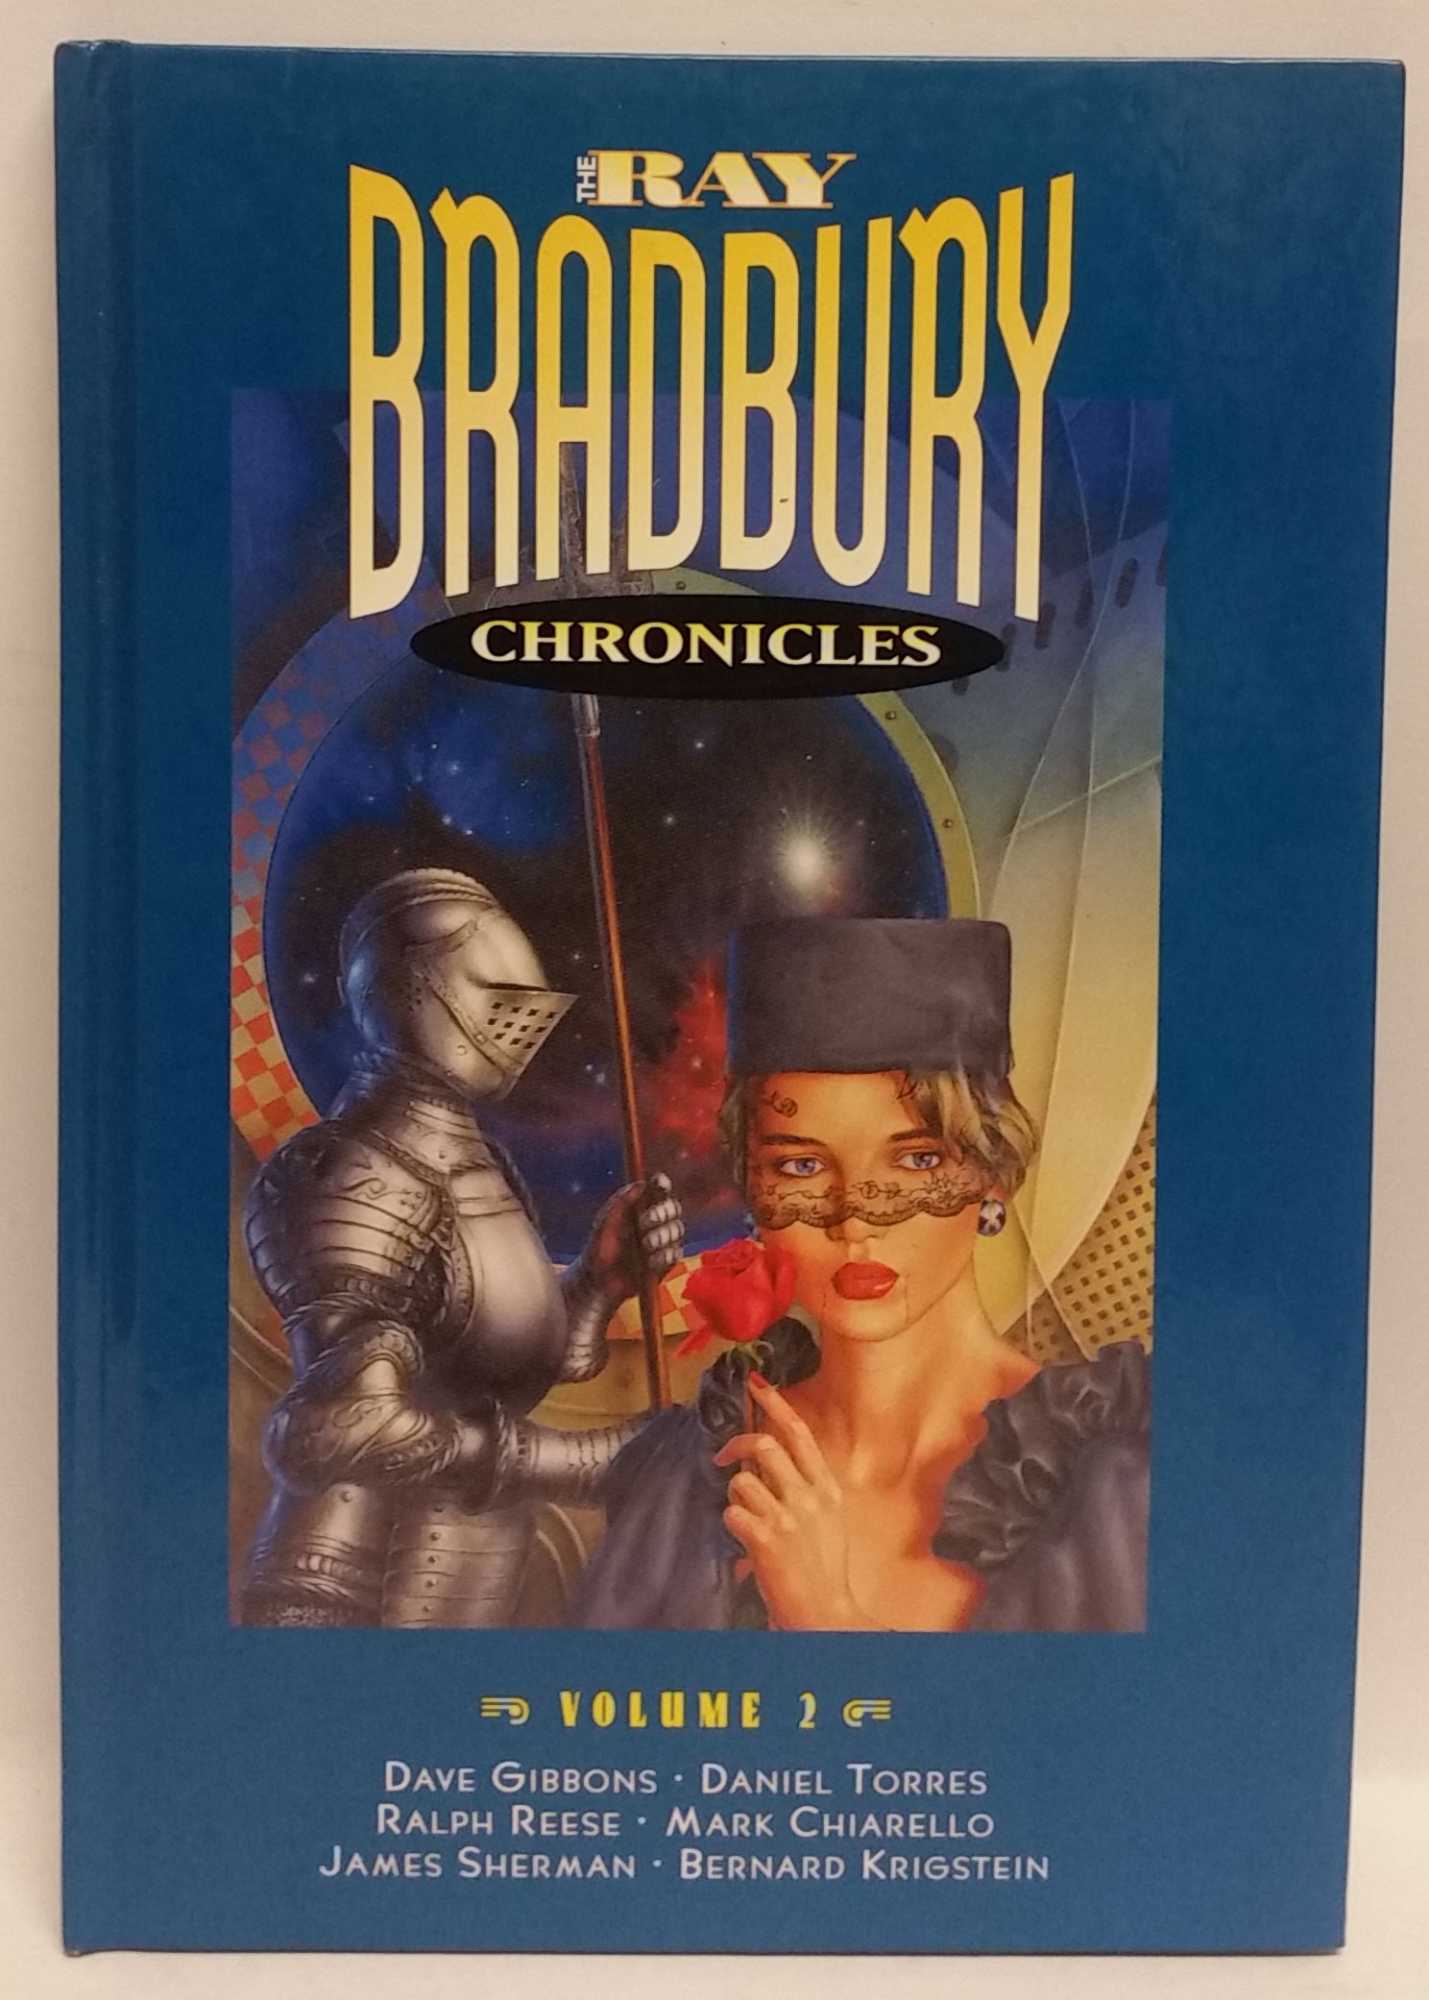 Dave Gibbons; Daniel Torres; Ralph Reese; Mark Chiarello; James Sherman; Bernard Krigstein - The Ray Bradbury Chronicles (Volume 2)